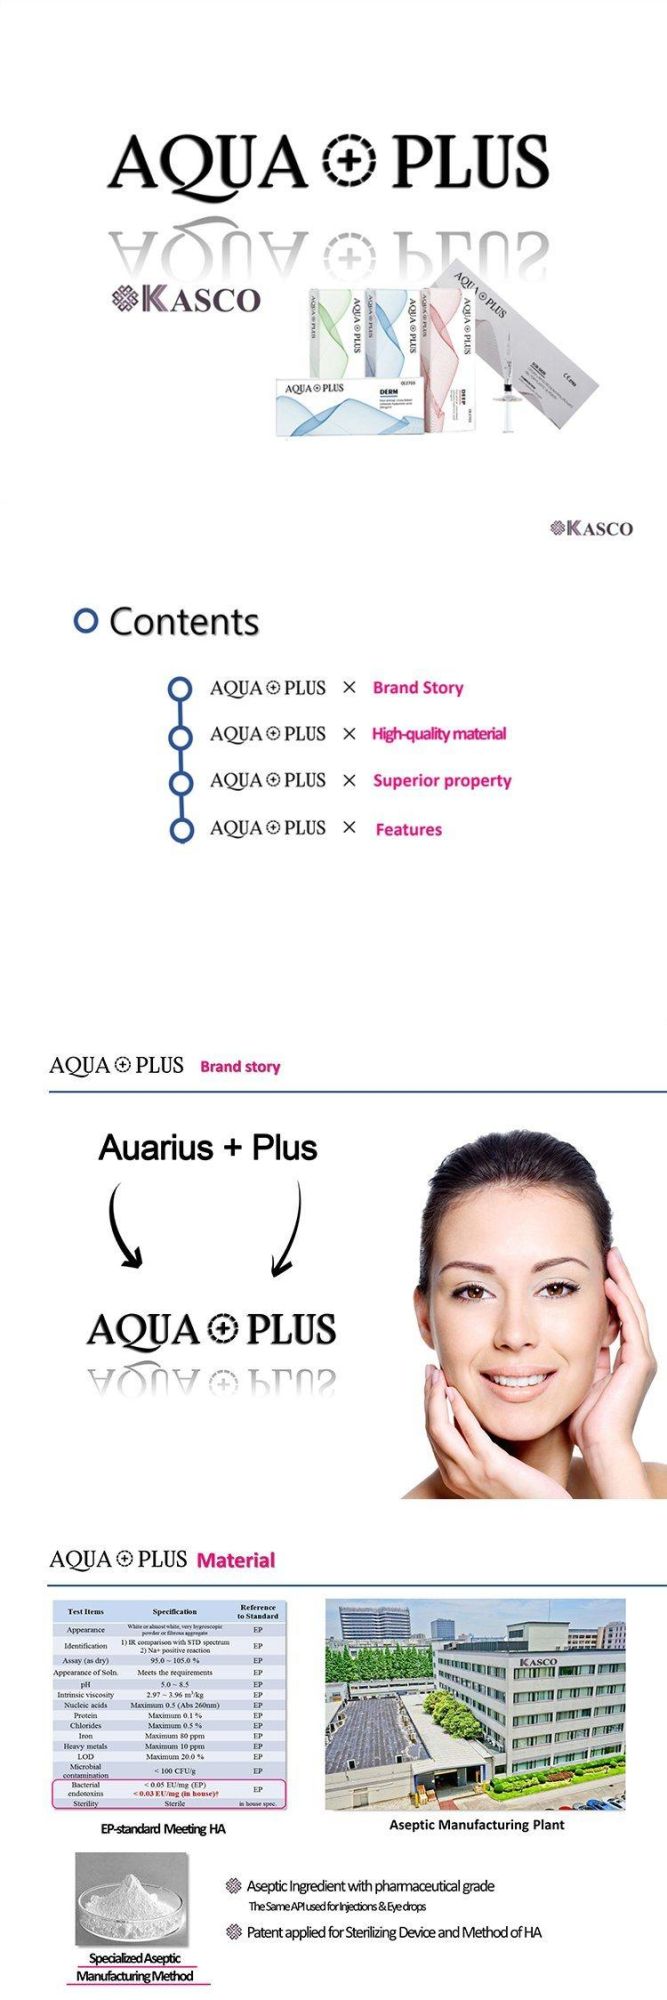 Aqua Plus Beauty Injection Dermal Fillers Lips Syringe Dermal Filler or Nose Lip Cheek 2ml